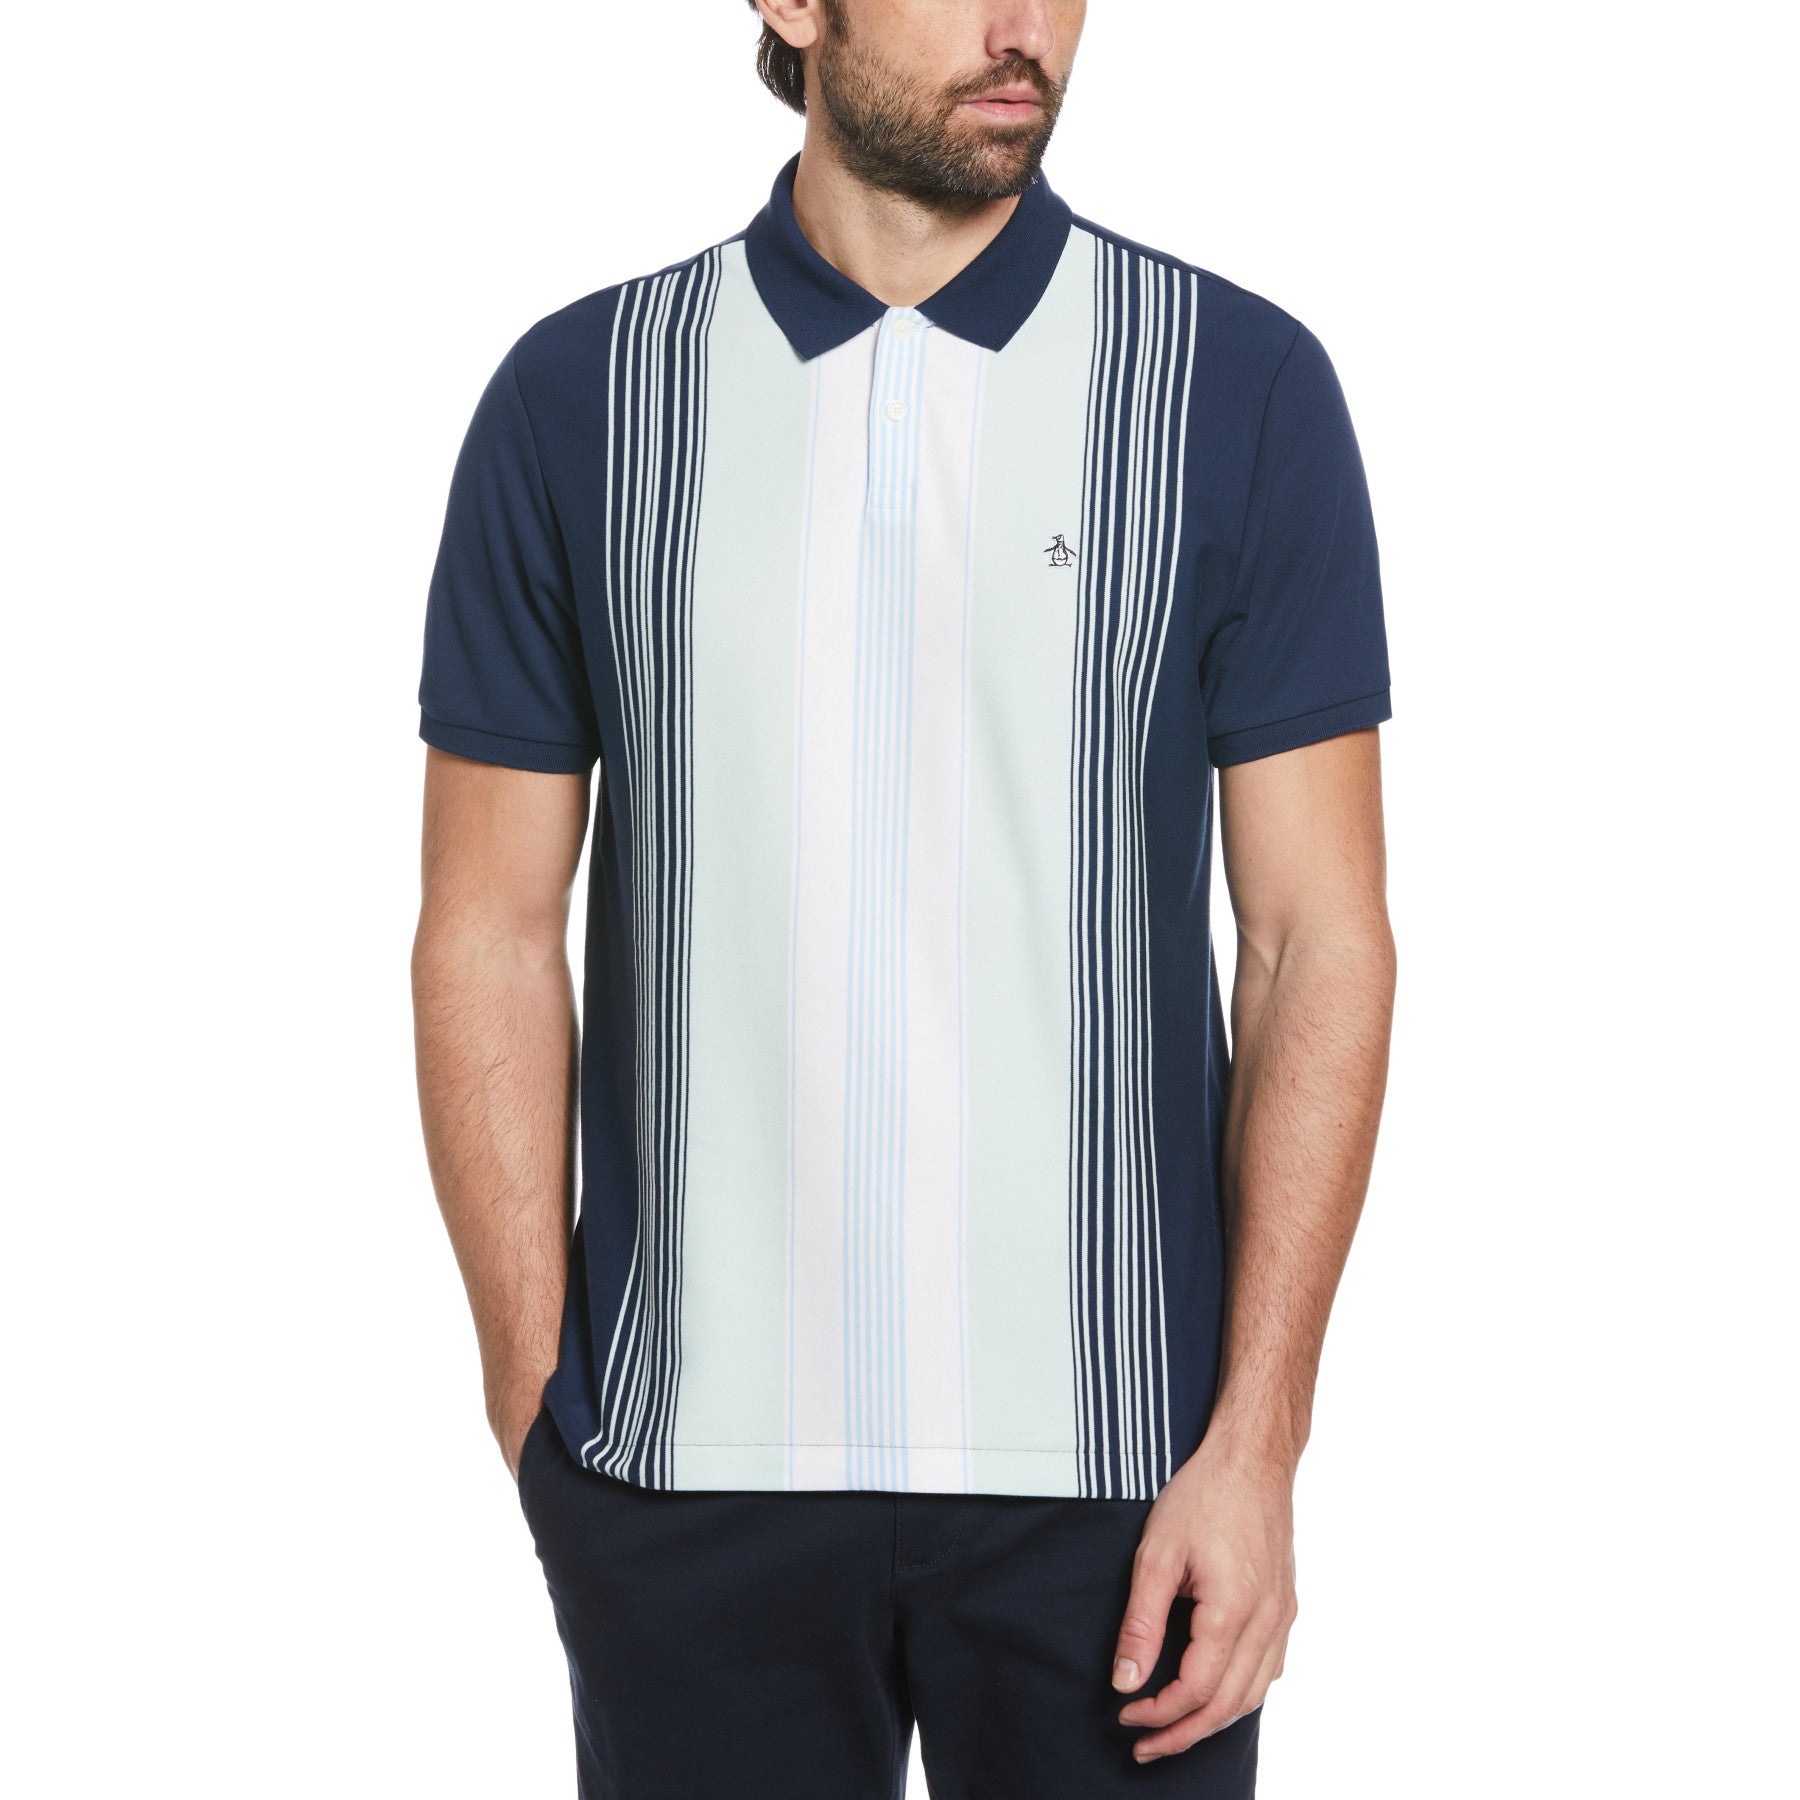 View Premium Stripe Short Sleeve Polo Shirt In Dress Blues information